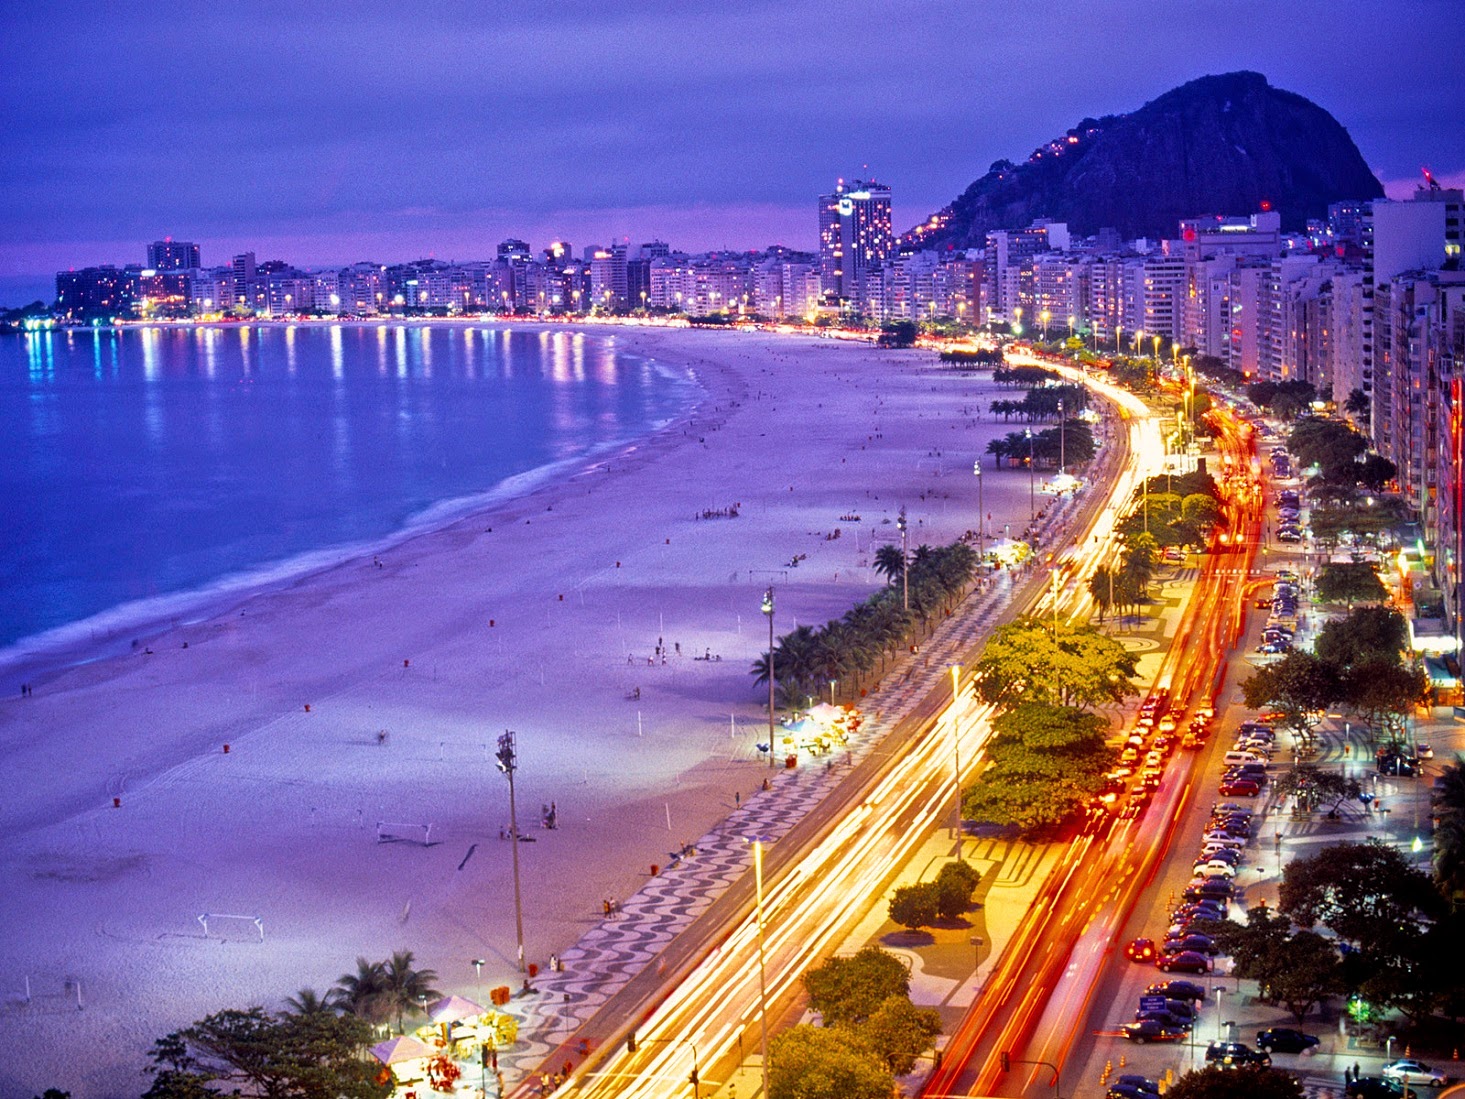 tourist city of brazil